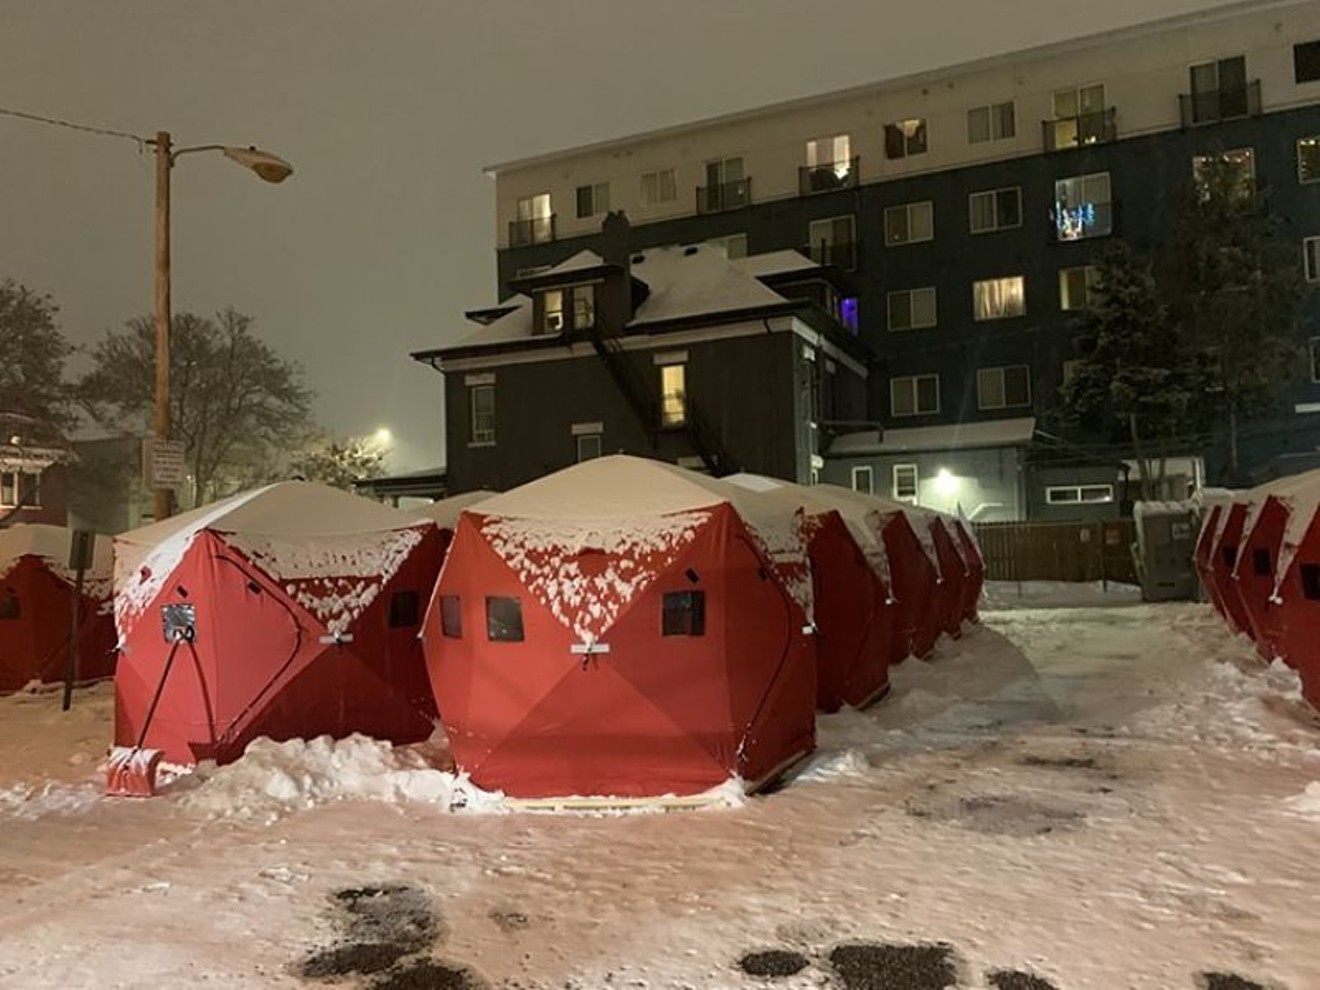 Denver's first safe-camping site opened in December 2020.